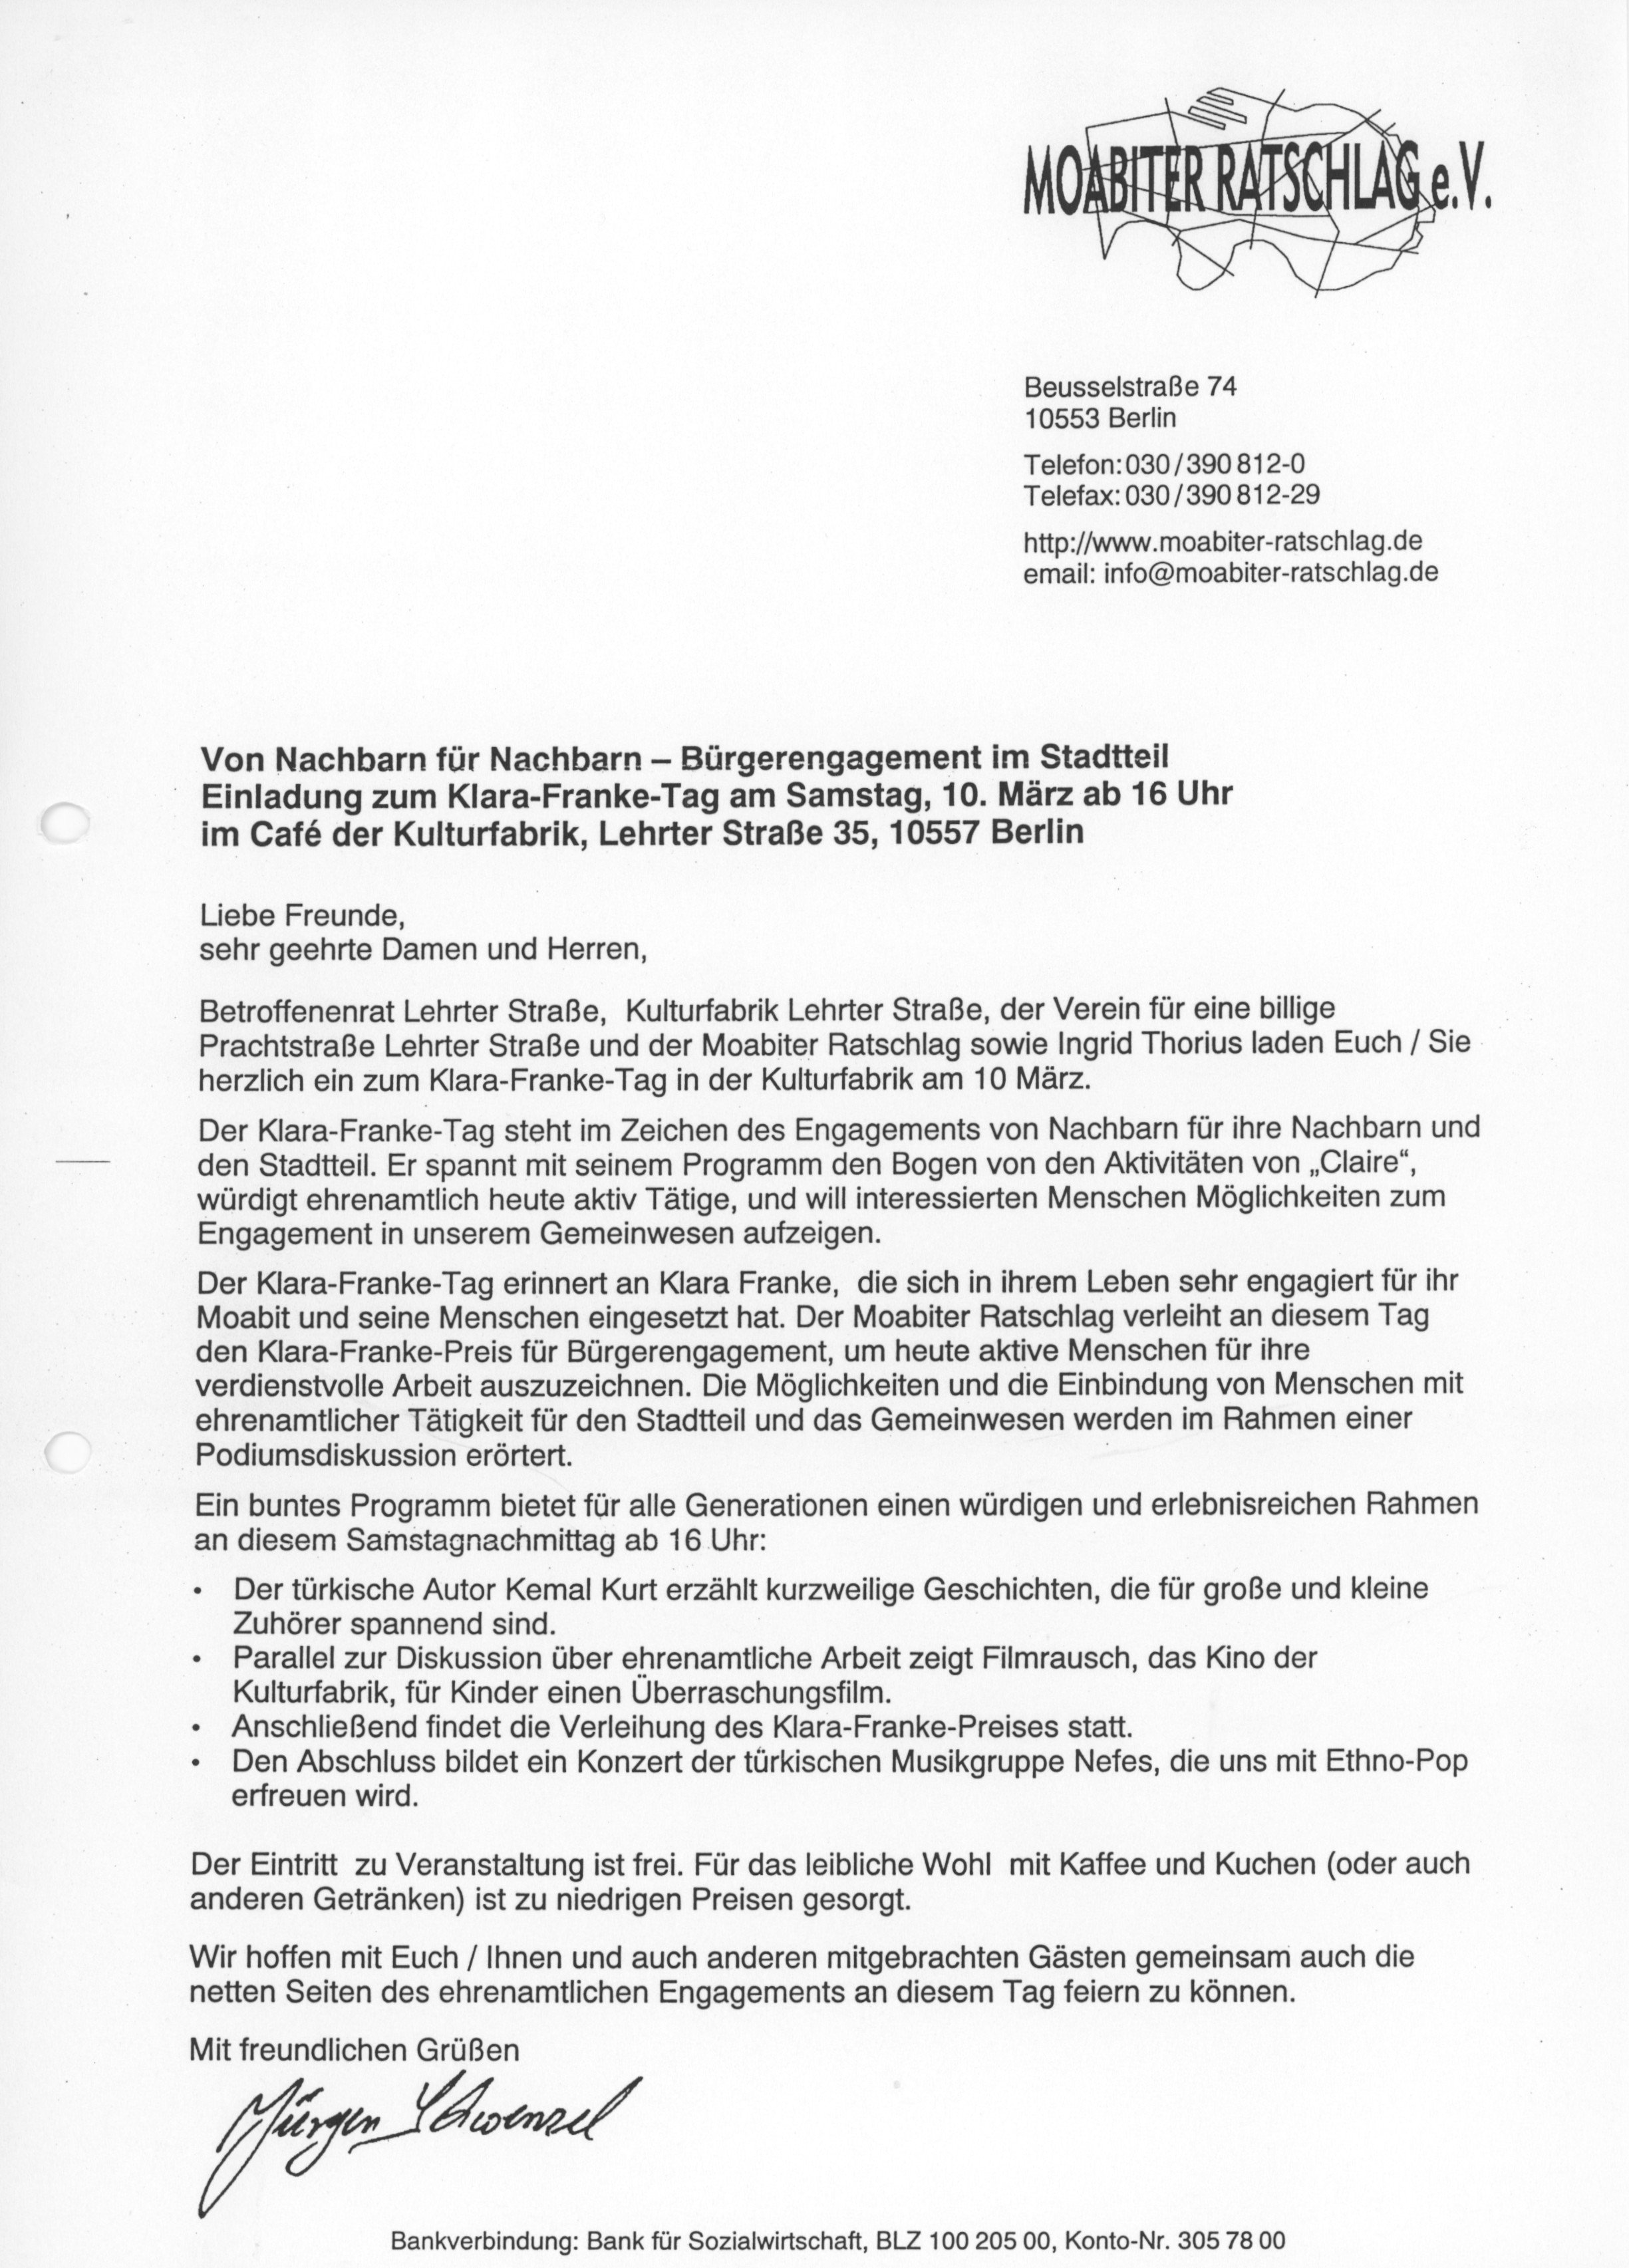 Einladung zur Klara-Franke-Preisverleihung 2001 (B-Laden CC BY-NC-SA)